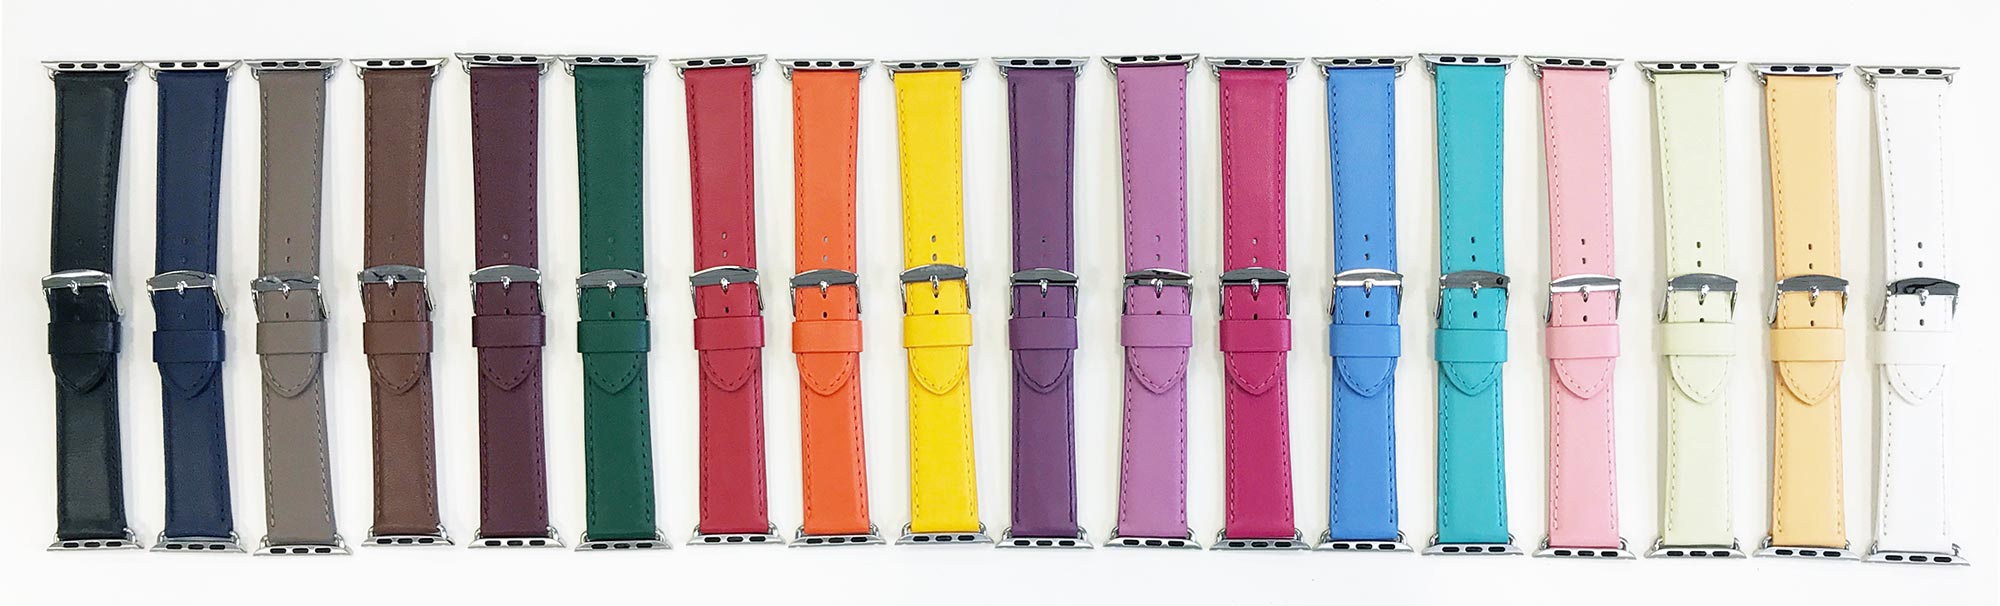 Collections des couleurs de bracelets cuir femme Apple Watch Holi Made in France